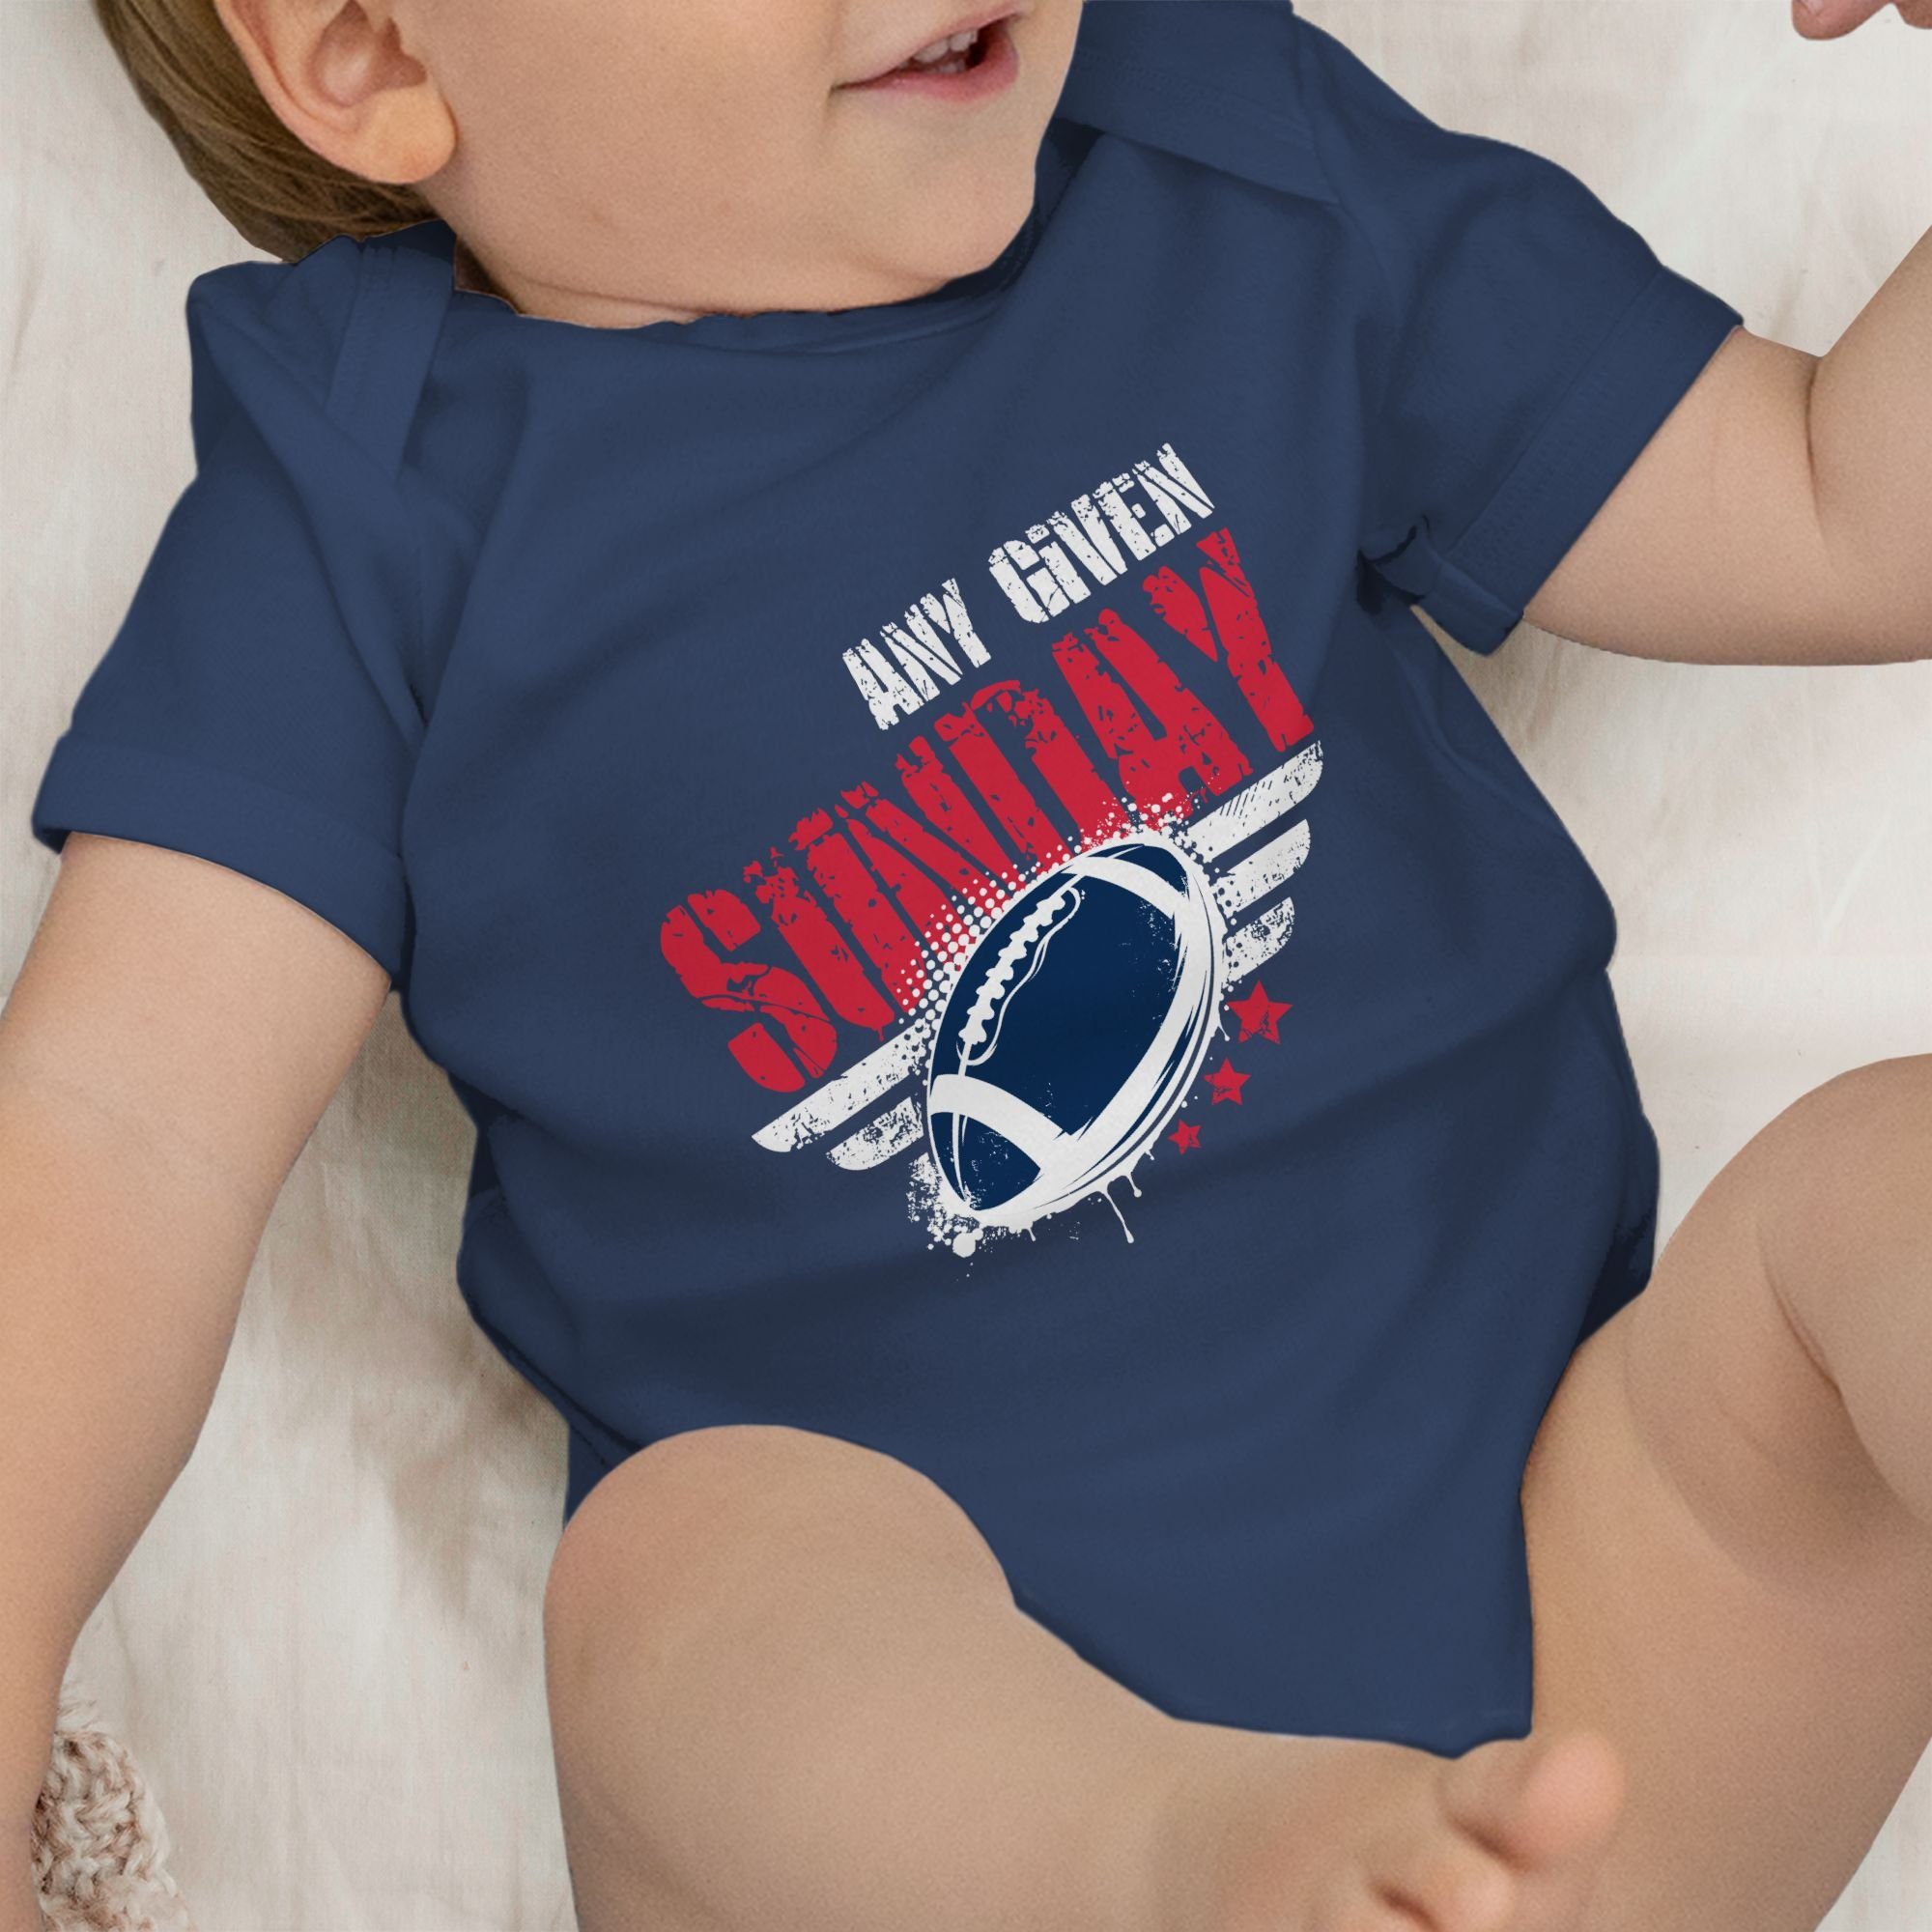 Given Sport Blau & Shirtracer 1 New England Baby Bewegung Sunday Any Navy Football Shirtbody